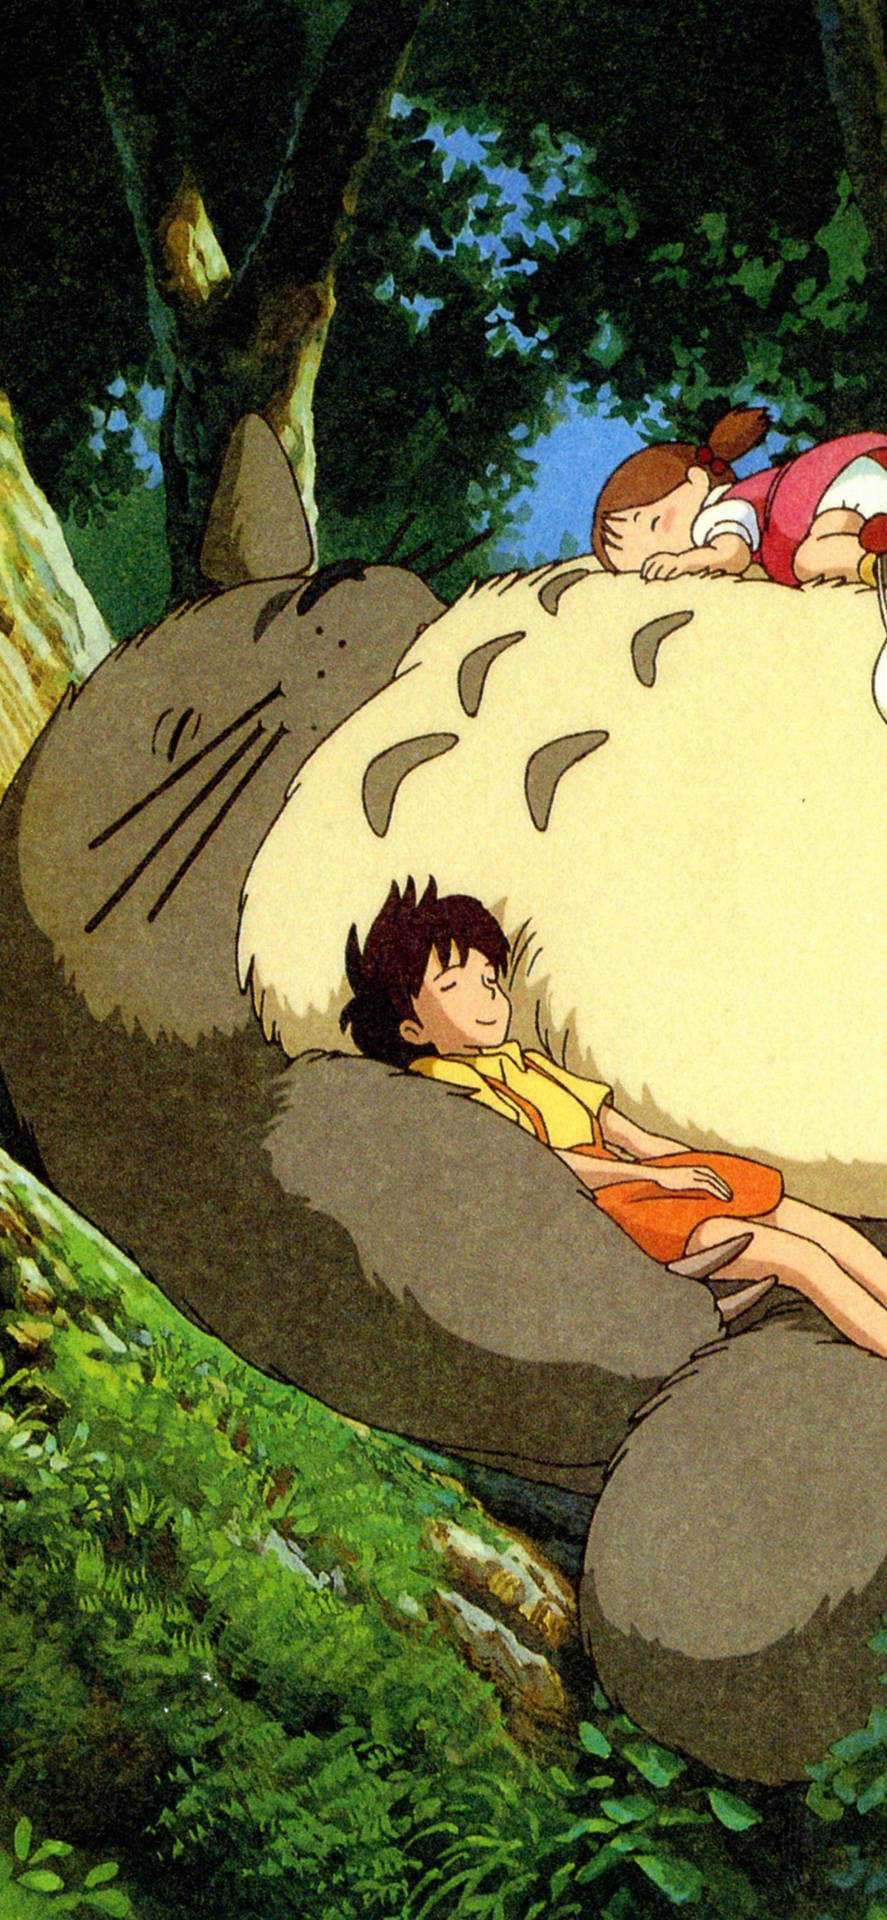 Kallapå Studio Ghiblis Andar Med Denna Iphone Bakgrundsbild! Wallpaper